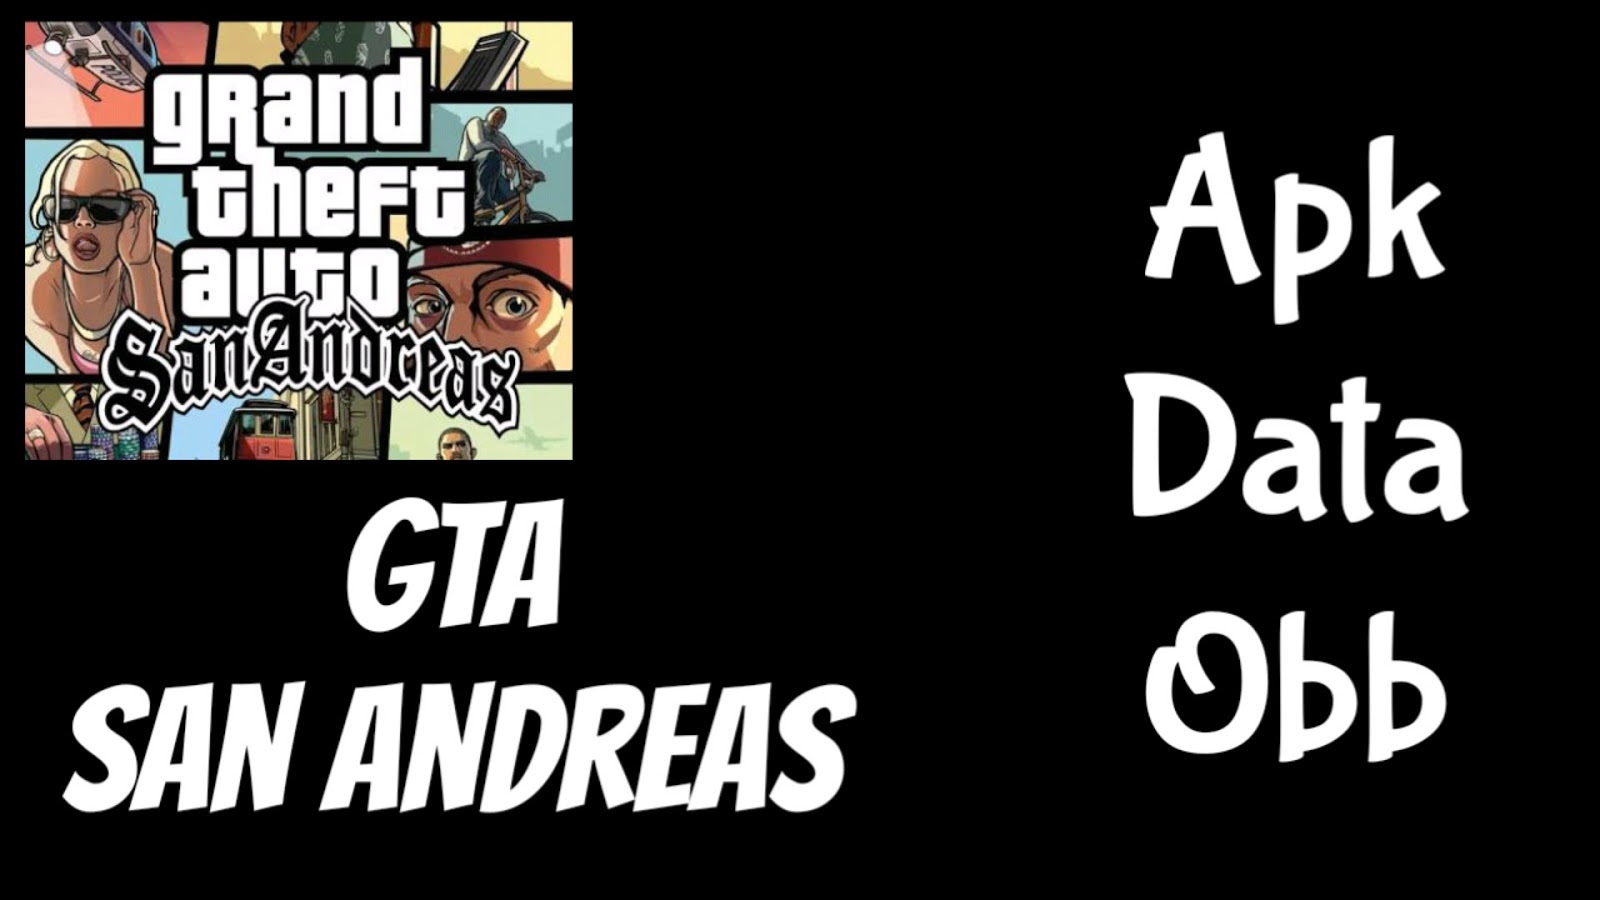 GTA San Andreas Android Apk Data free download